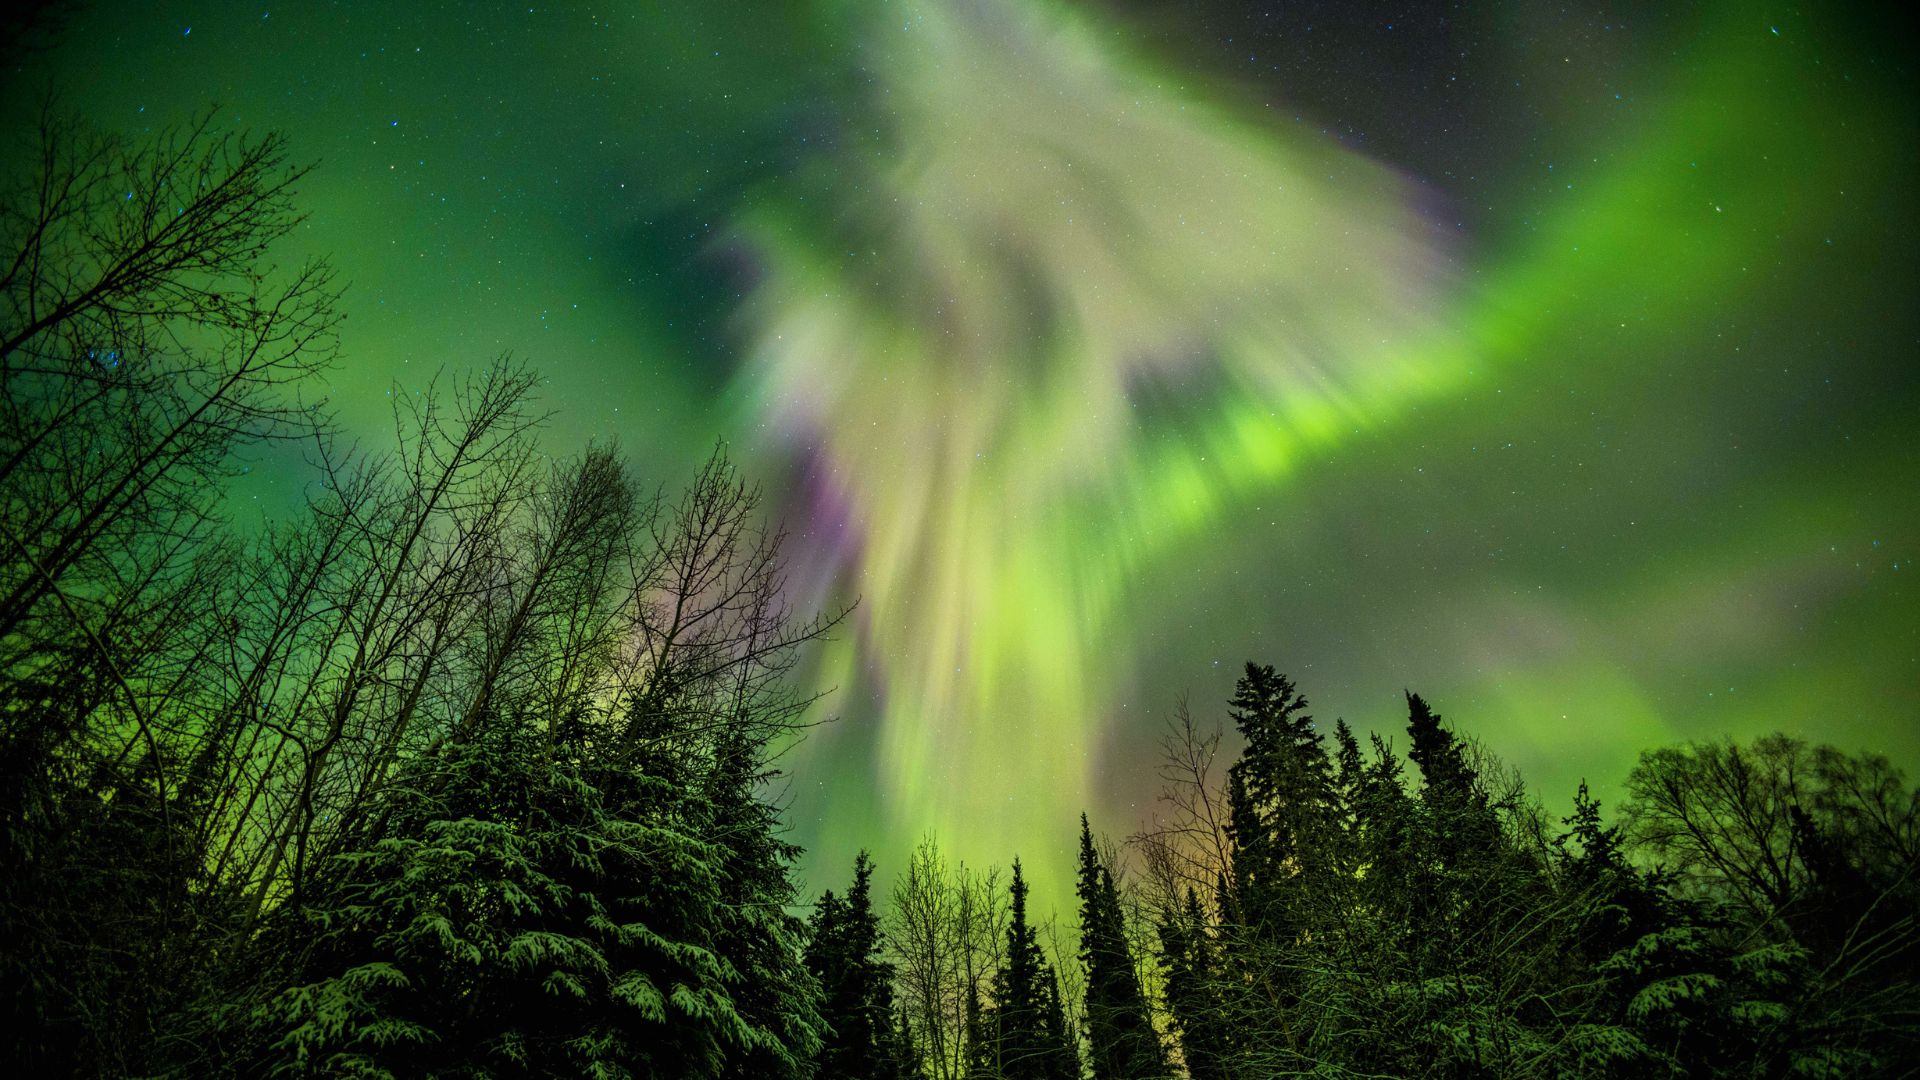 https://www.numerama.com/wp-content/uploads/2023/02/aurore-boreale-2.jpg